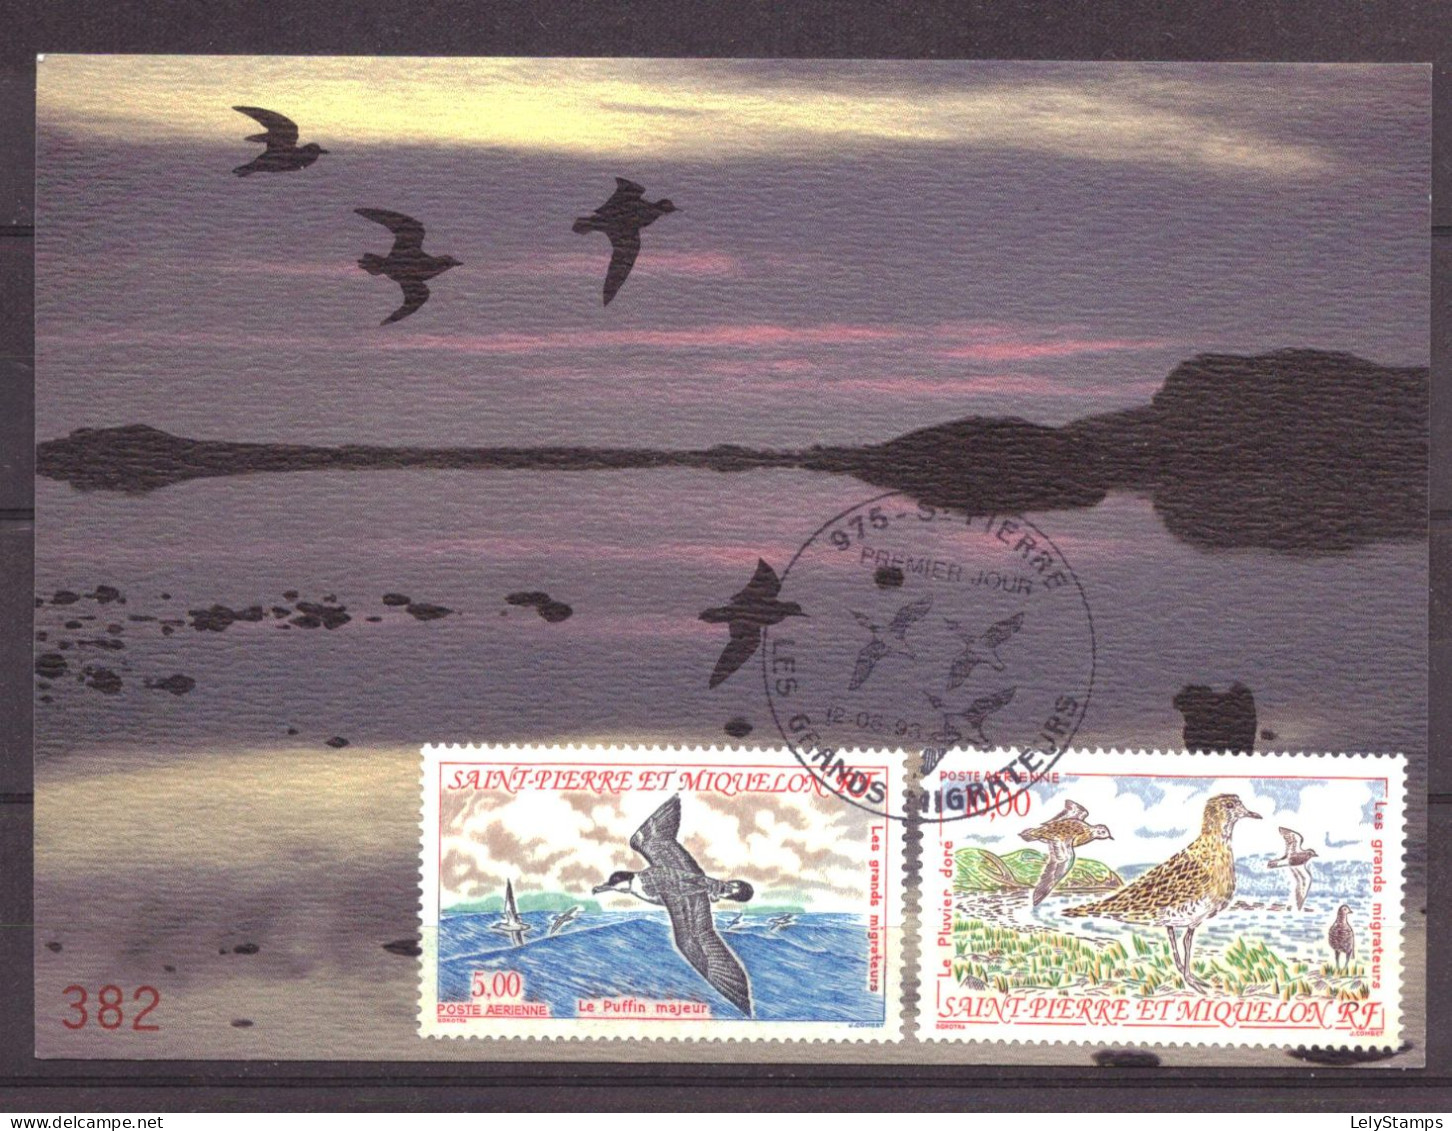 Saint-Pierre En Miquelon 654 & 655 FDC Birds Animals Nature (1993) - Maximumkaarten